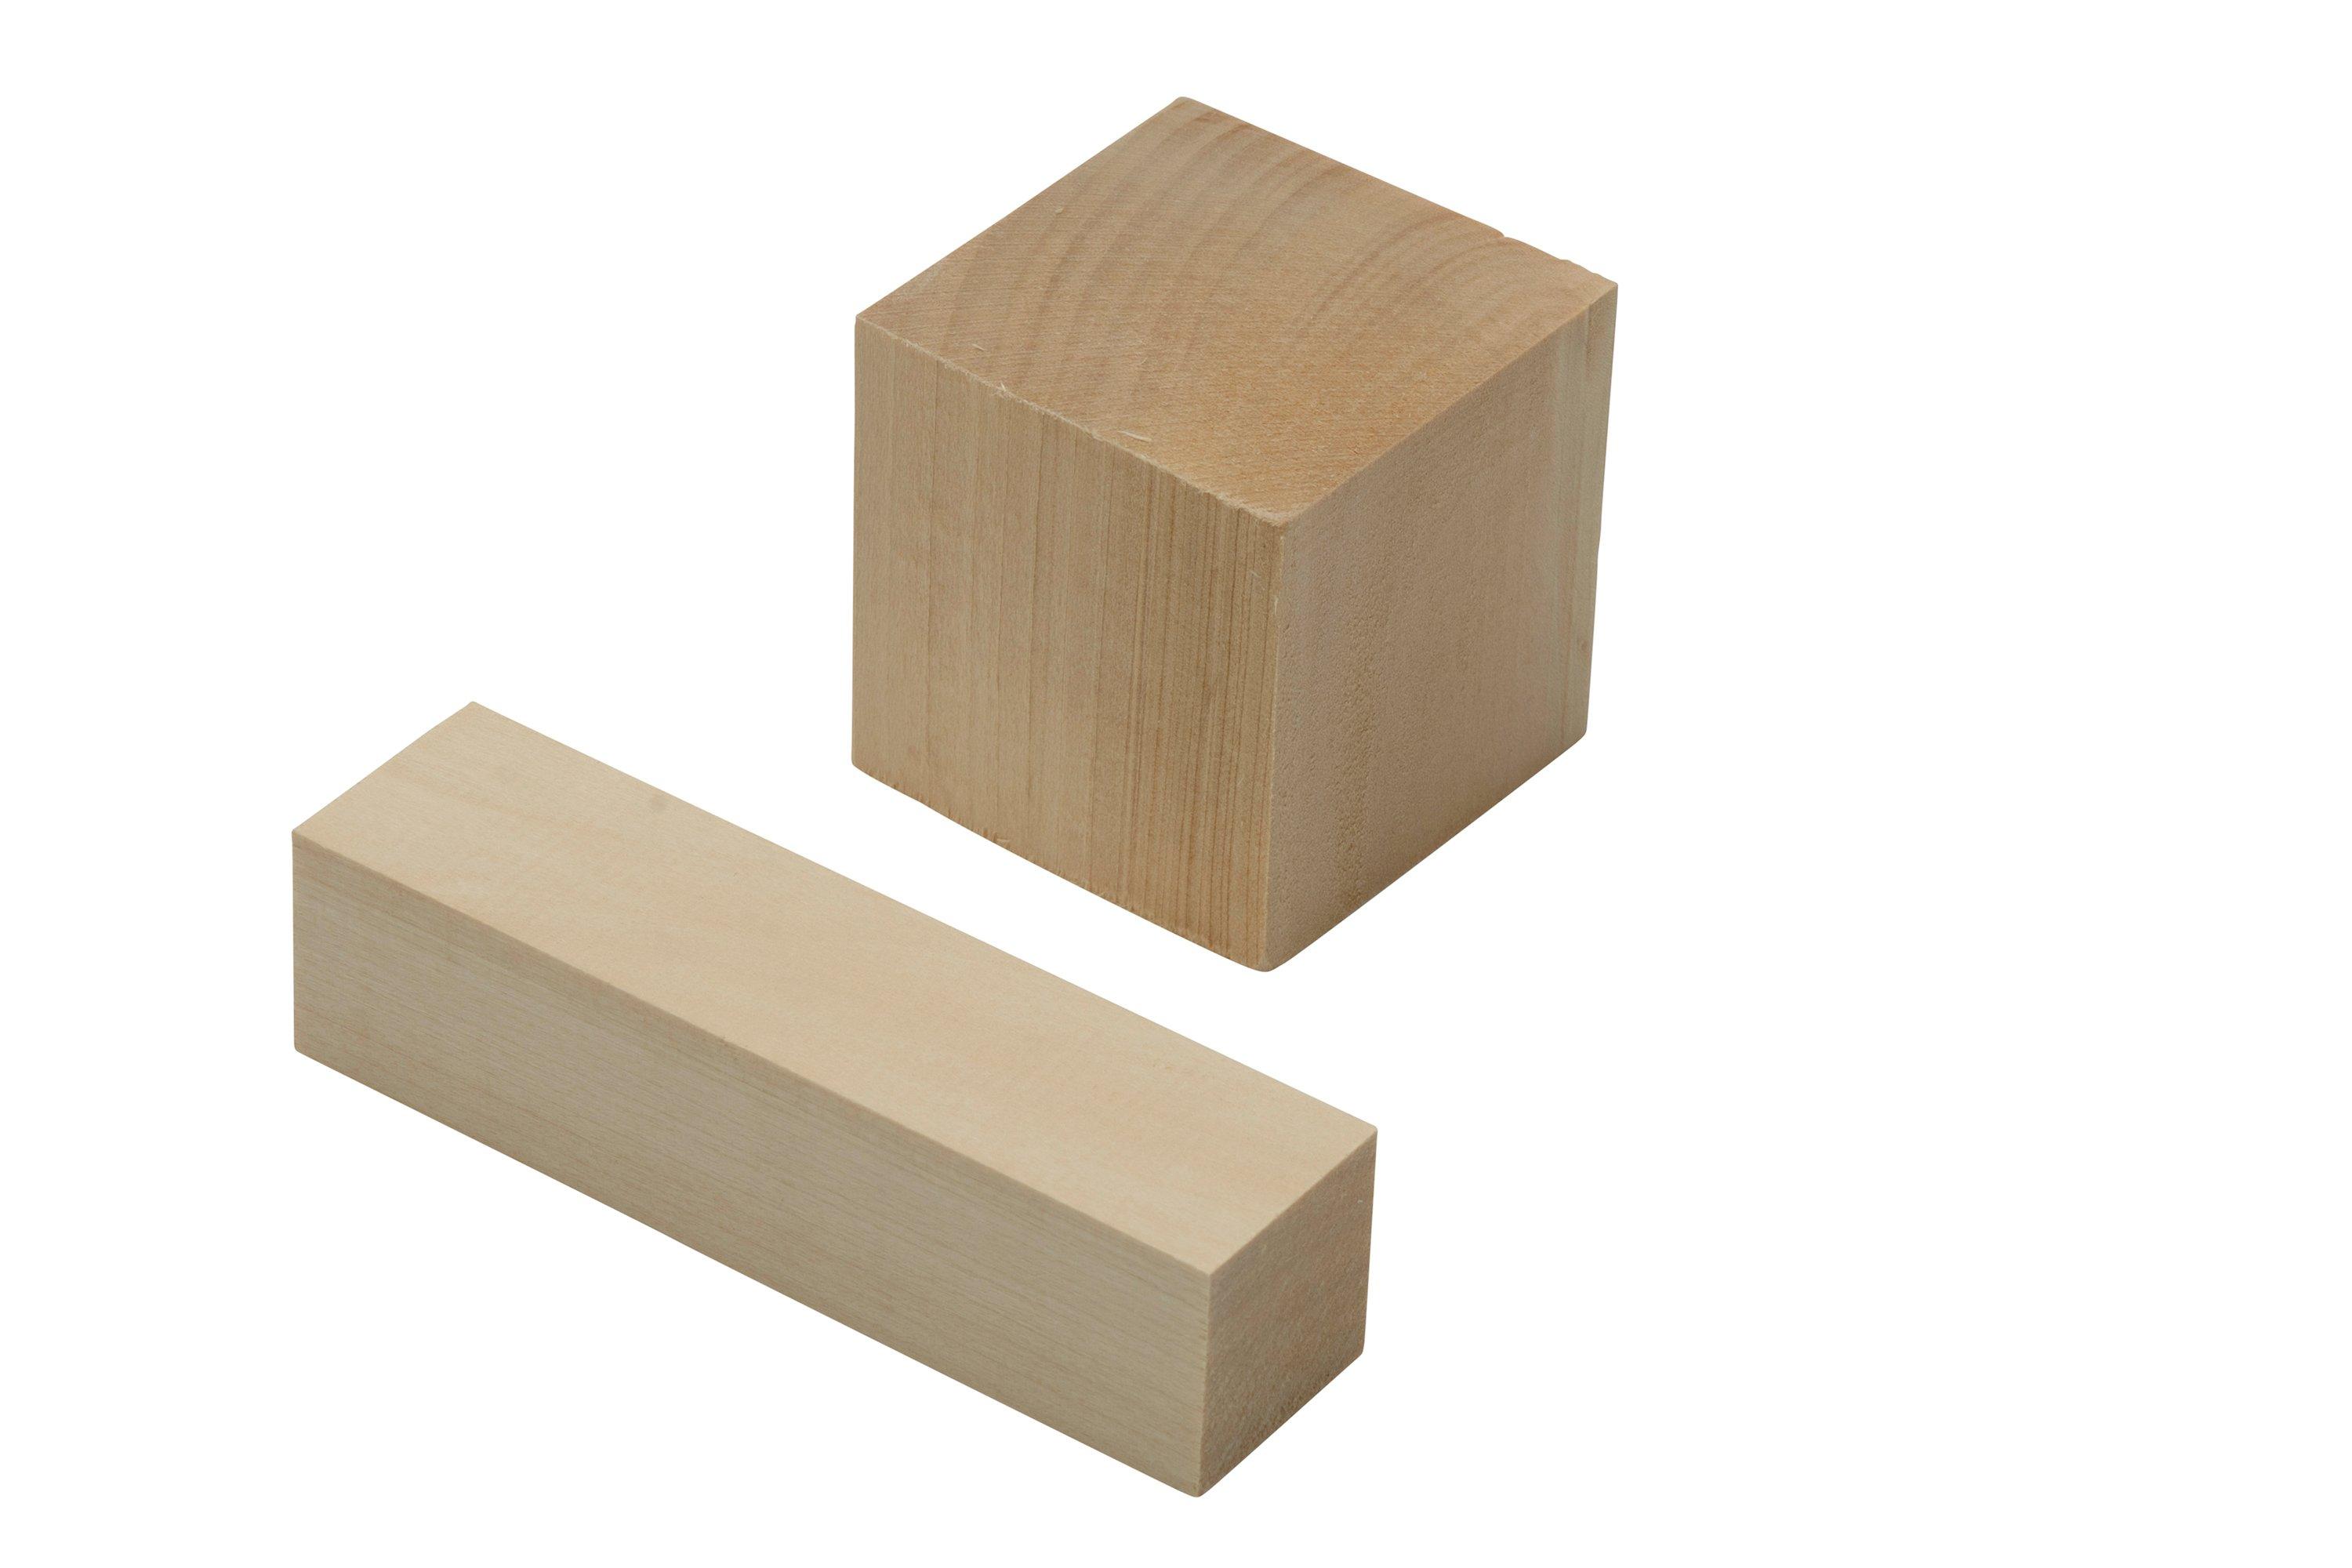 BeaverCraft Wood Carving Blocks BW10, 10-piece set